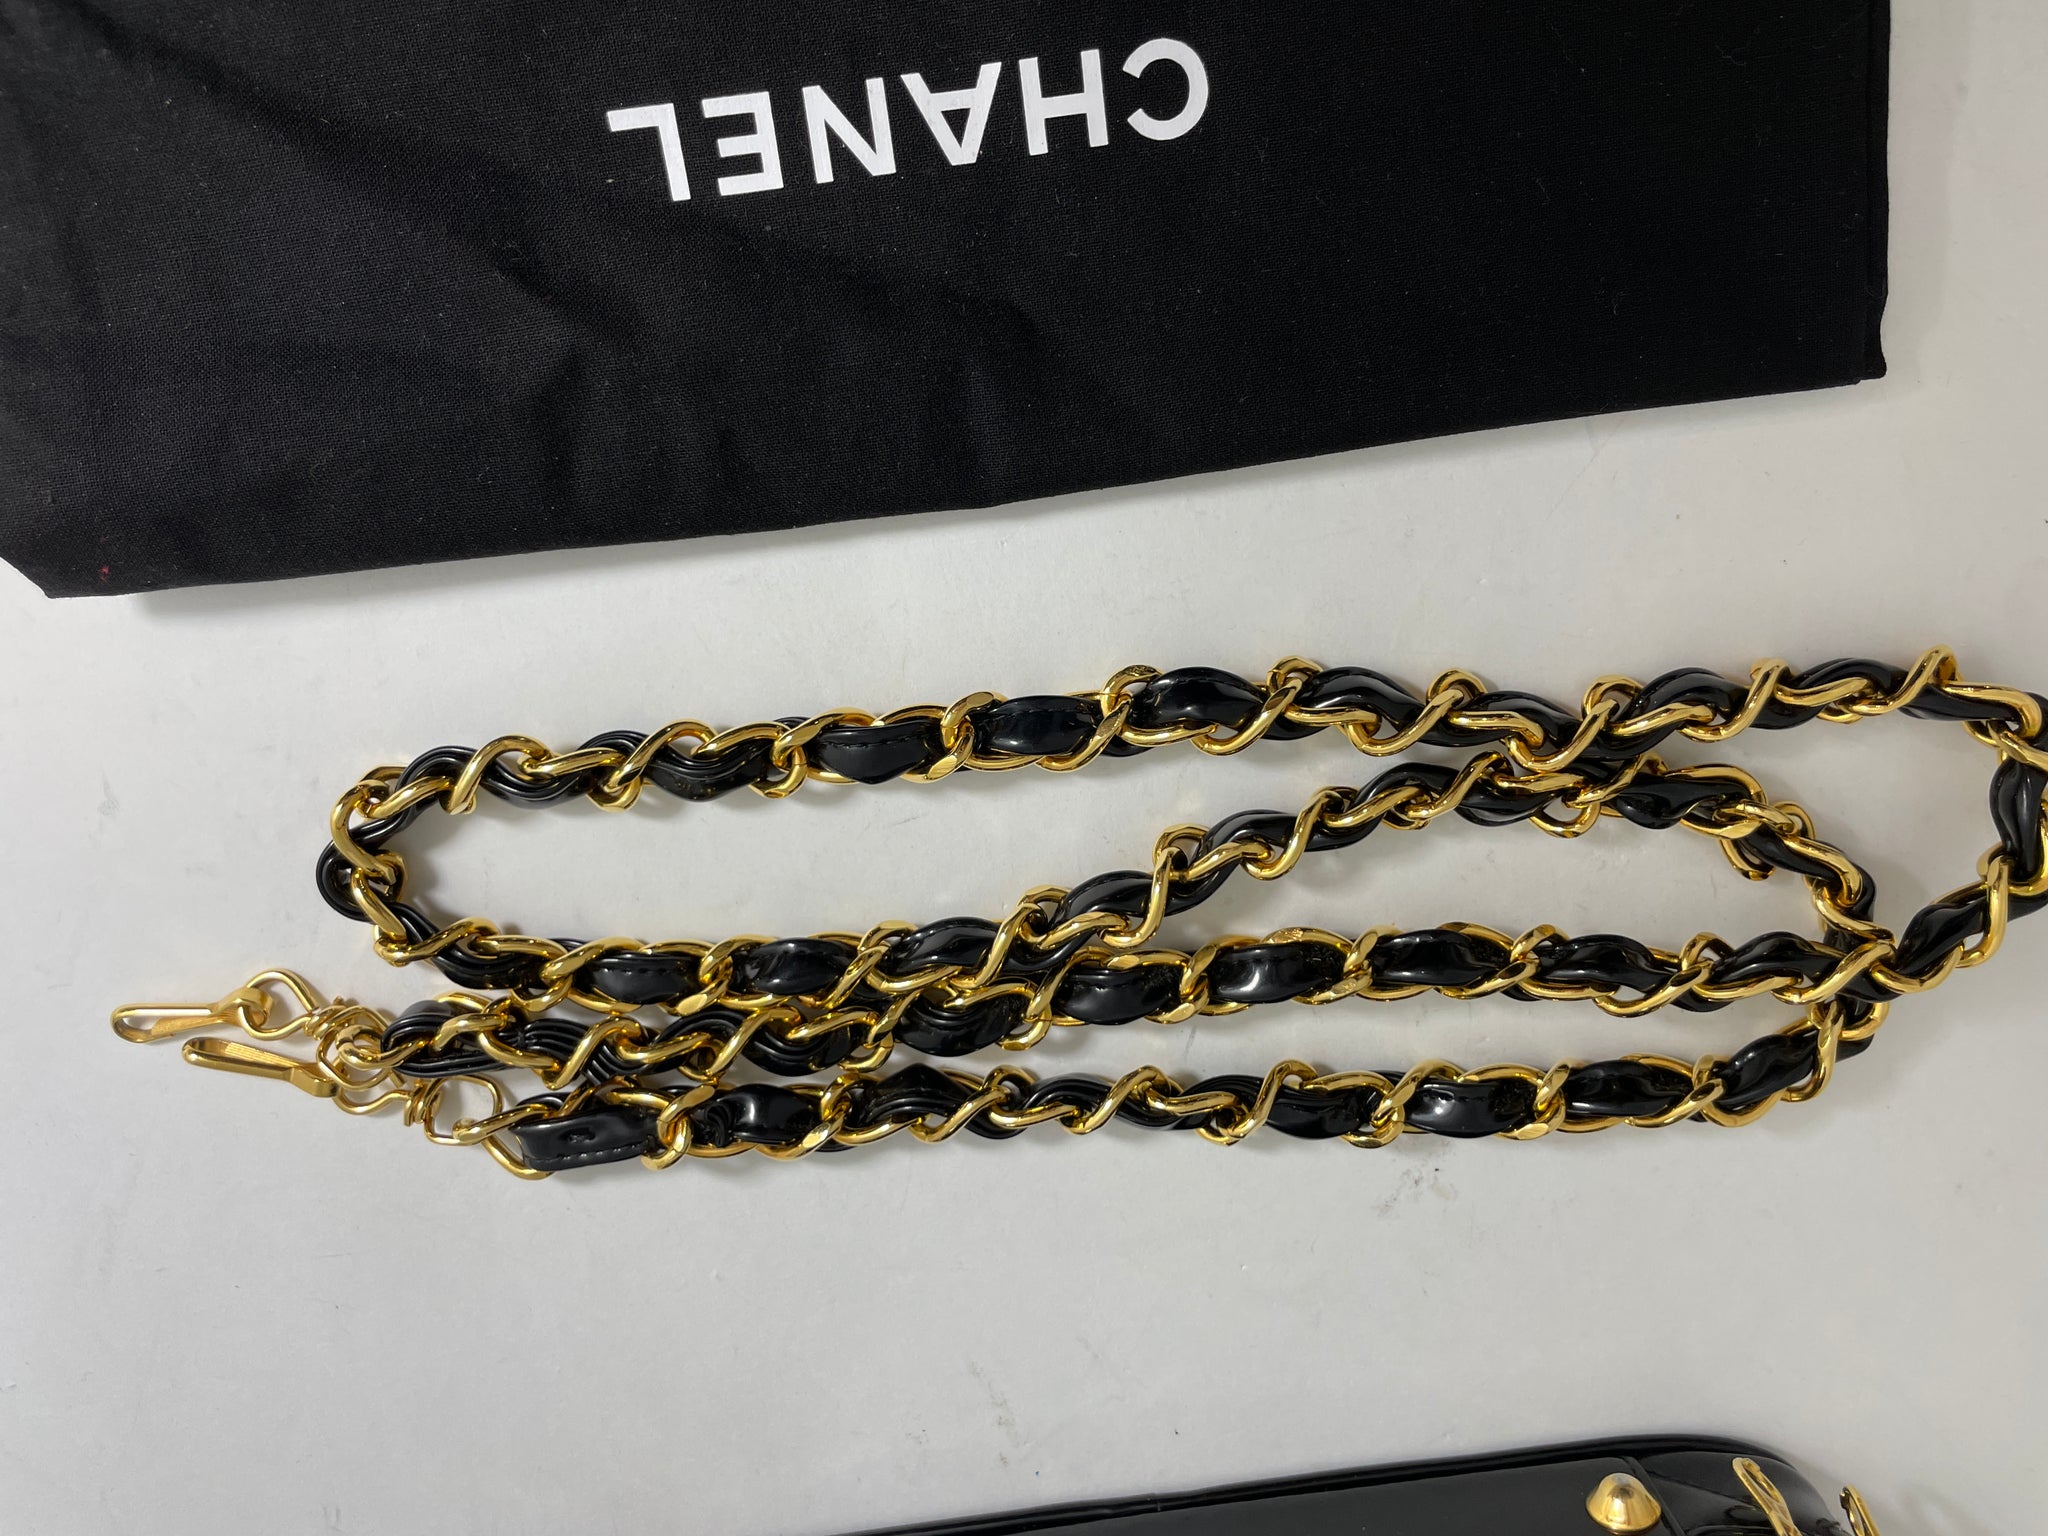 CHANEL Medallion 24K Gold Chain Leather Belt Black